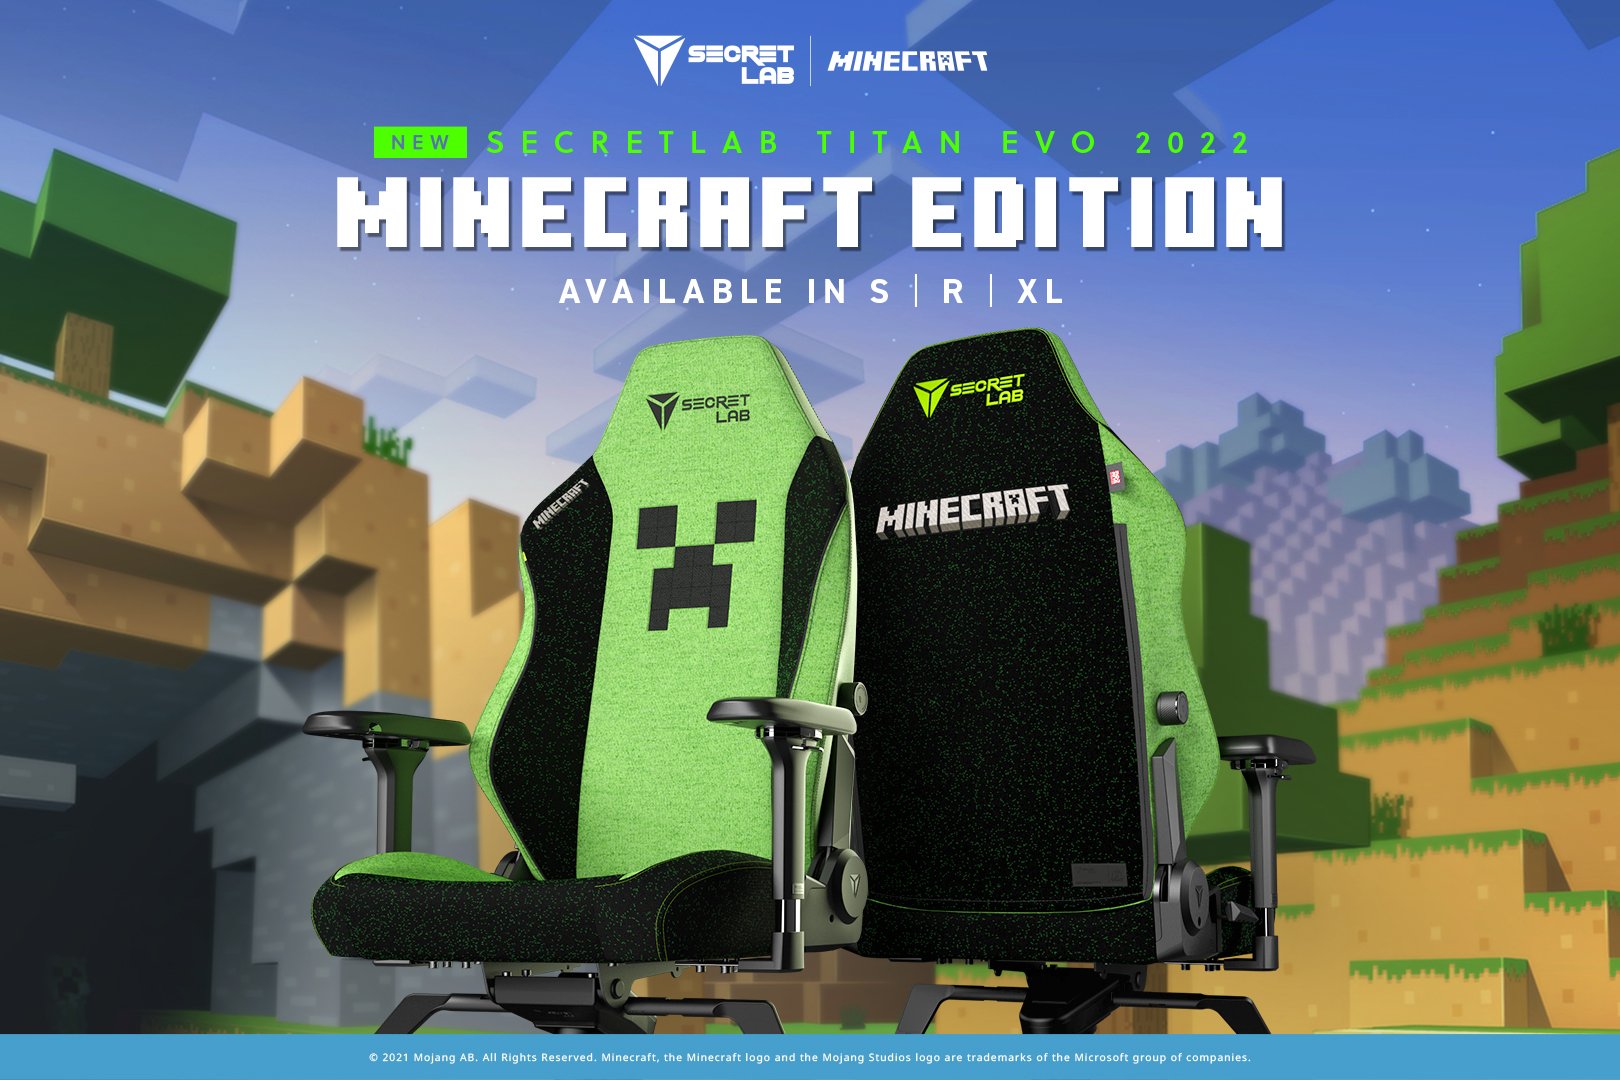 Minecraft Secretlab Titan Evo 2022 Creeper Chair Image